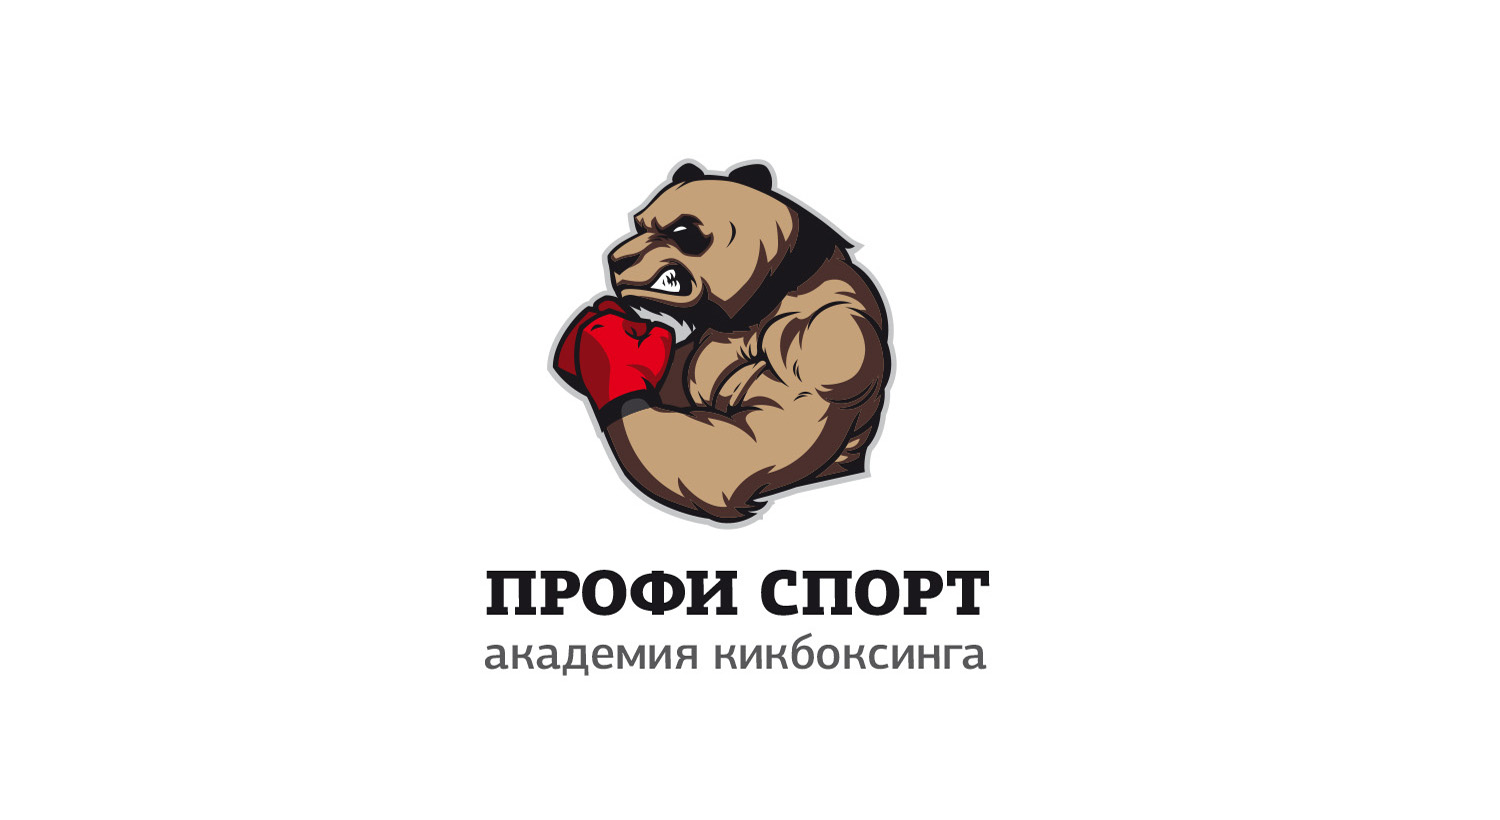 «Профи Спорт» — основная версия логотипа